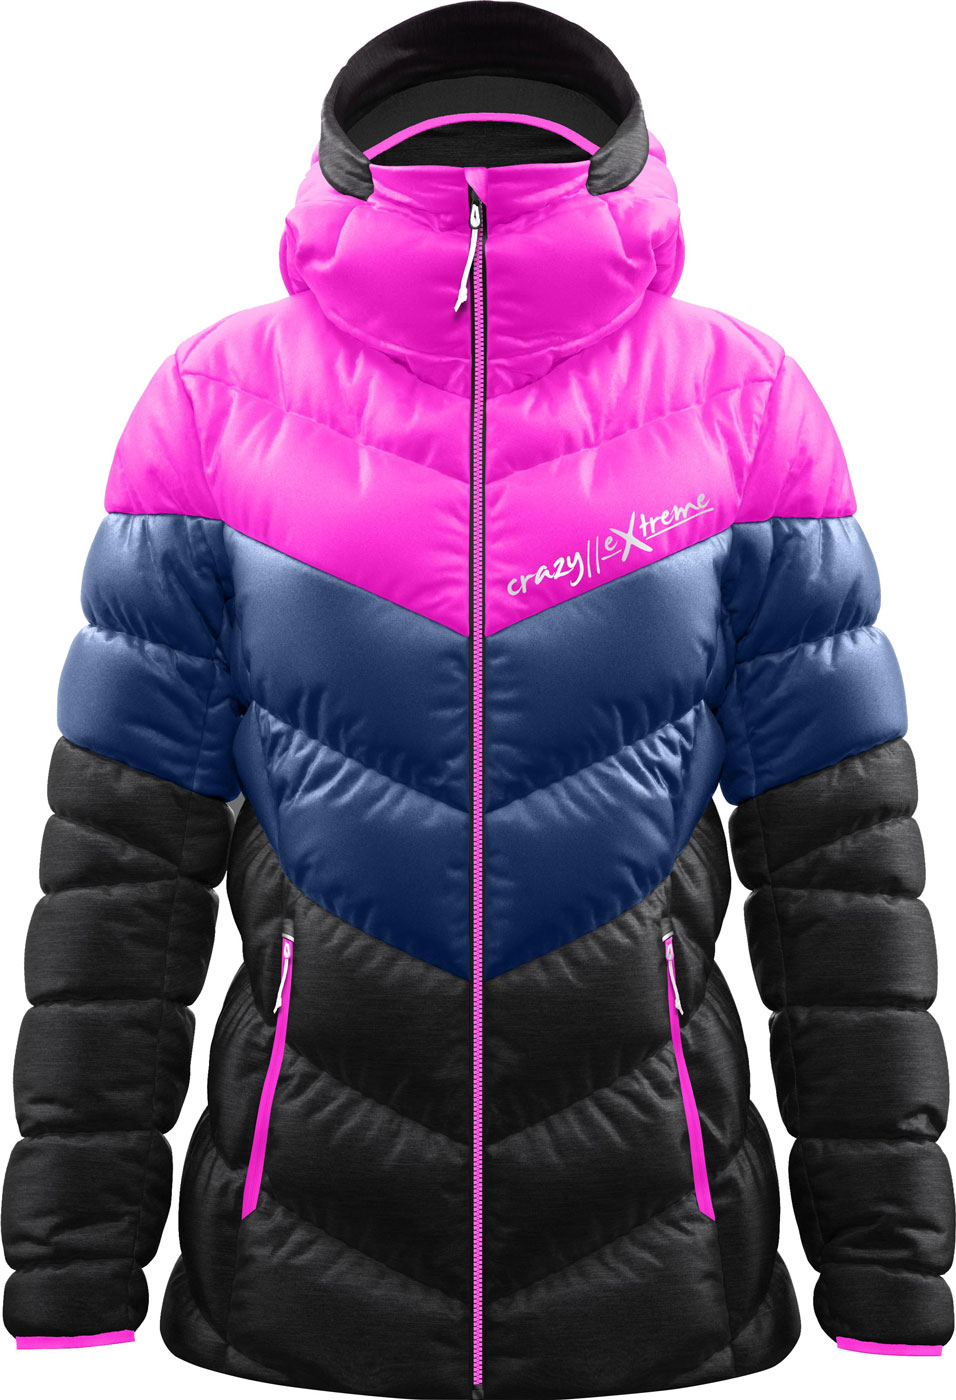 Jkt Idea - buy Jackets at - online Gardena Everest Crazy Sport Women